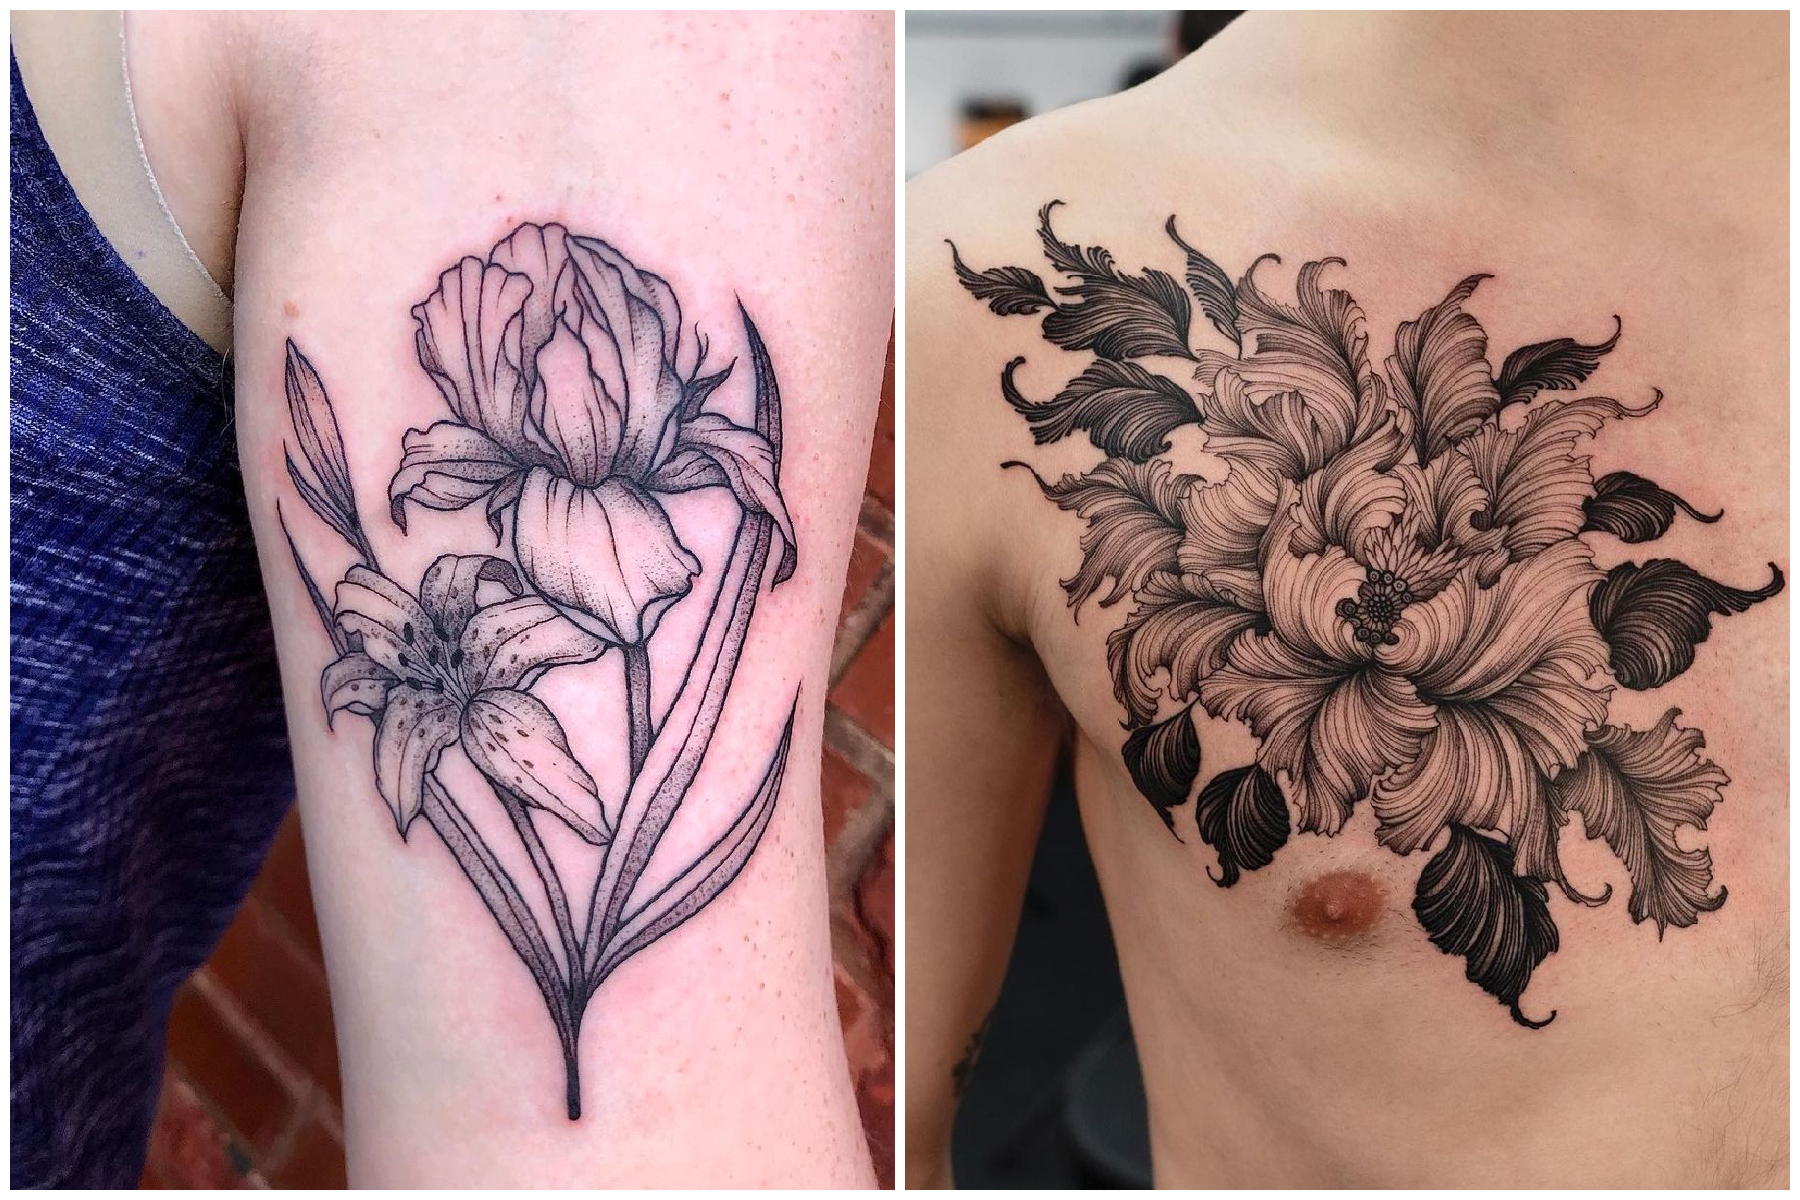 Giada Tattooing - 𝚠𝚊𝚝𝚌𝚑 𝚖𝚎 𝚐𝚛𝚘𝚠 𝚠𝚒𝚝𝚑𝚘𝚞𝚝 𝚢𝚘𝚞 🌻  #sunflowertattoo #sunflower #womantattoo #girltattoo #girlswithtattoos # tattoo #tattoos #tattooartist #tattoogirl #tattooed #legtattoo #blackwork  #blackworkerssubmission ...